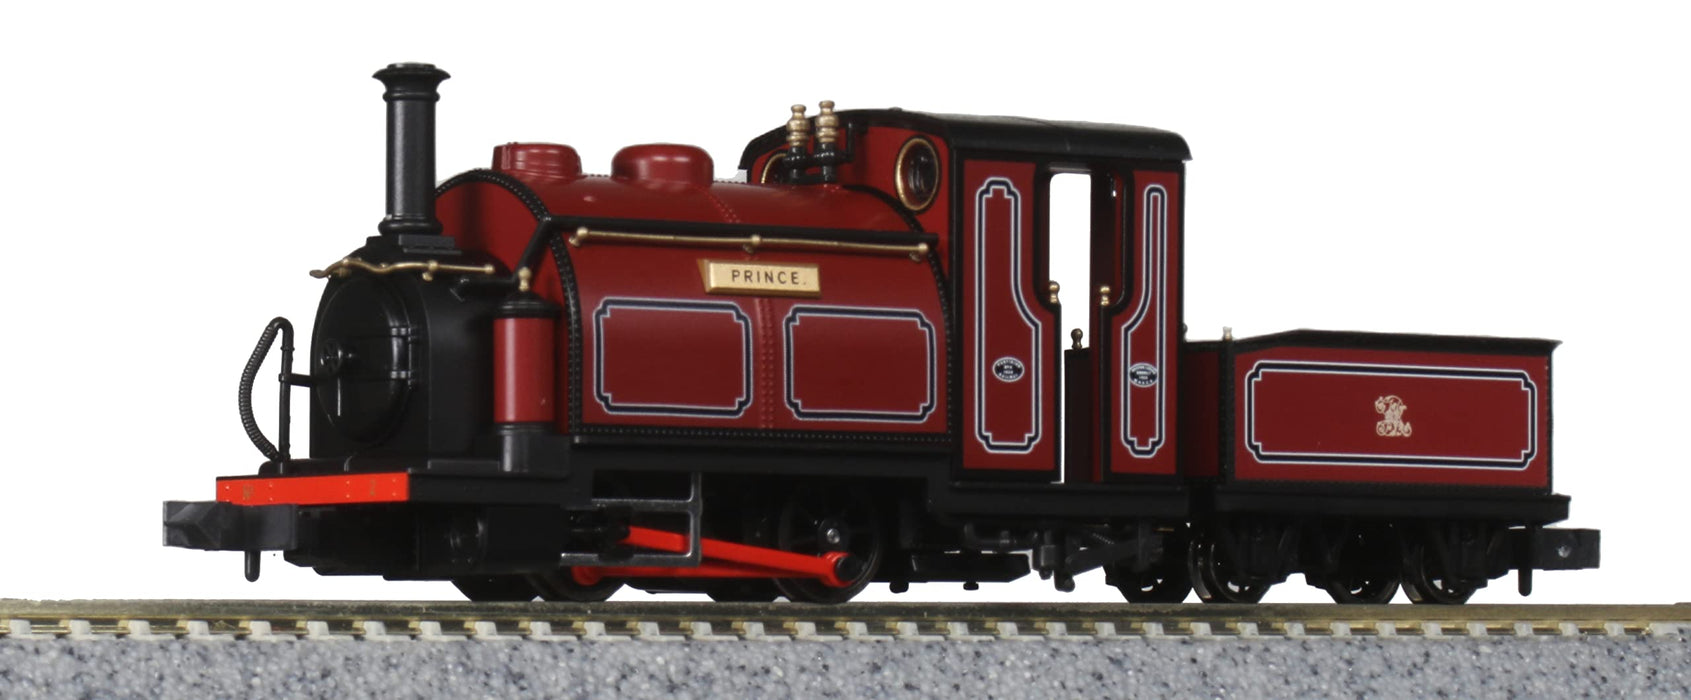 Kato Small England Prince Red Model Steam Locomotive Narrow Gauge 51-201B